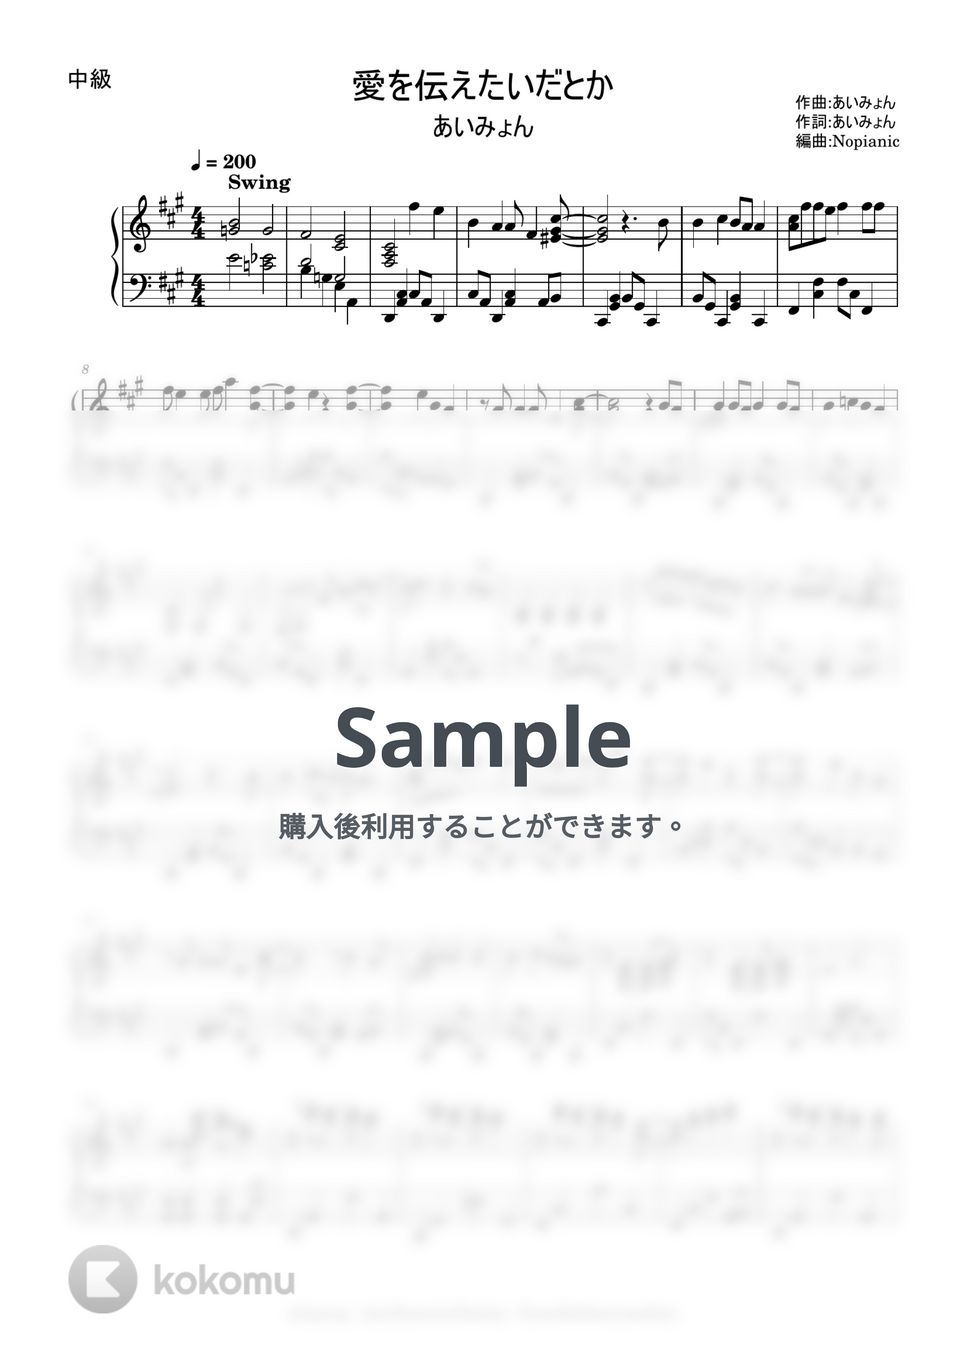 Aimyong - Ai wo Tsutaetai Datoka (intermediate, piano) by Mopianic